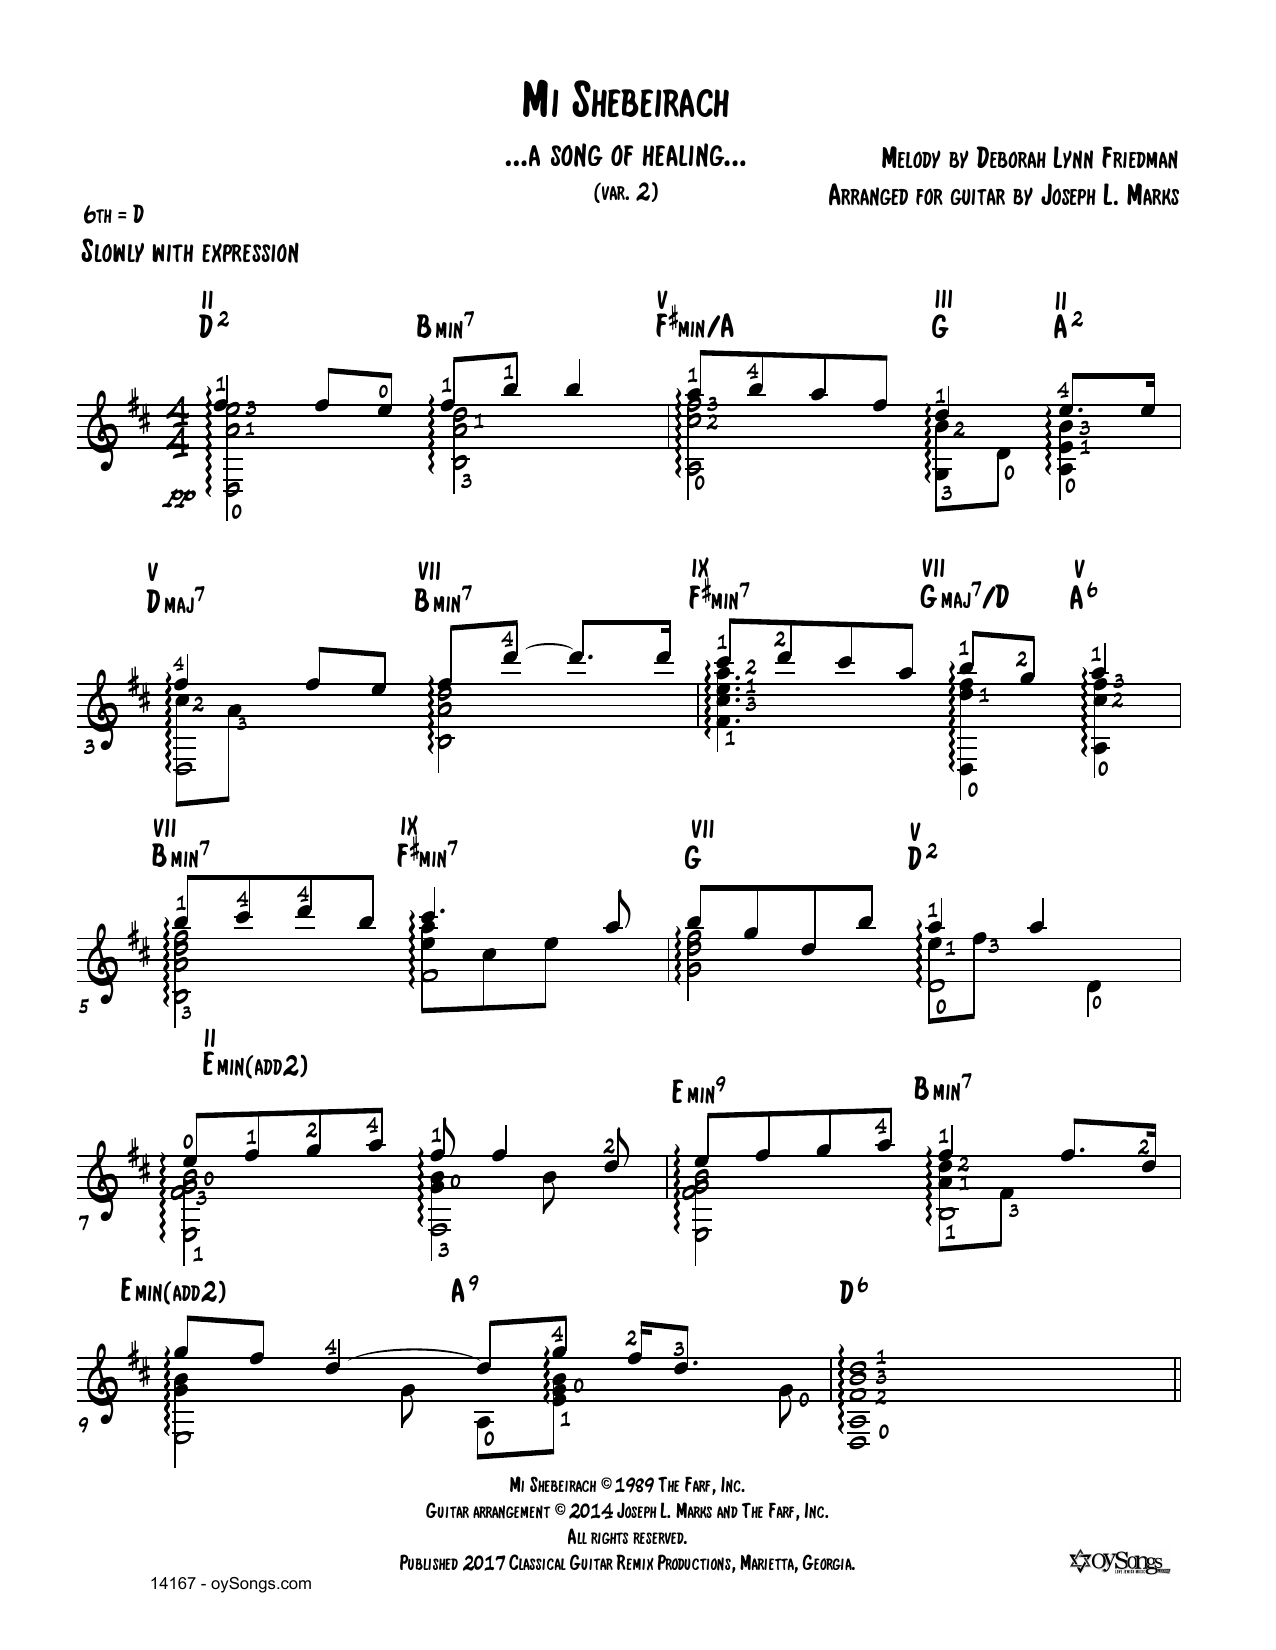 Debbie Friedman Mi Shebeirach Var 2 (arr. Joe Marks) Sheet Music Notes & Chords for Guitar Tab - Download or Print PDF